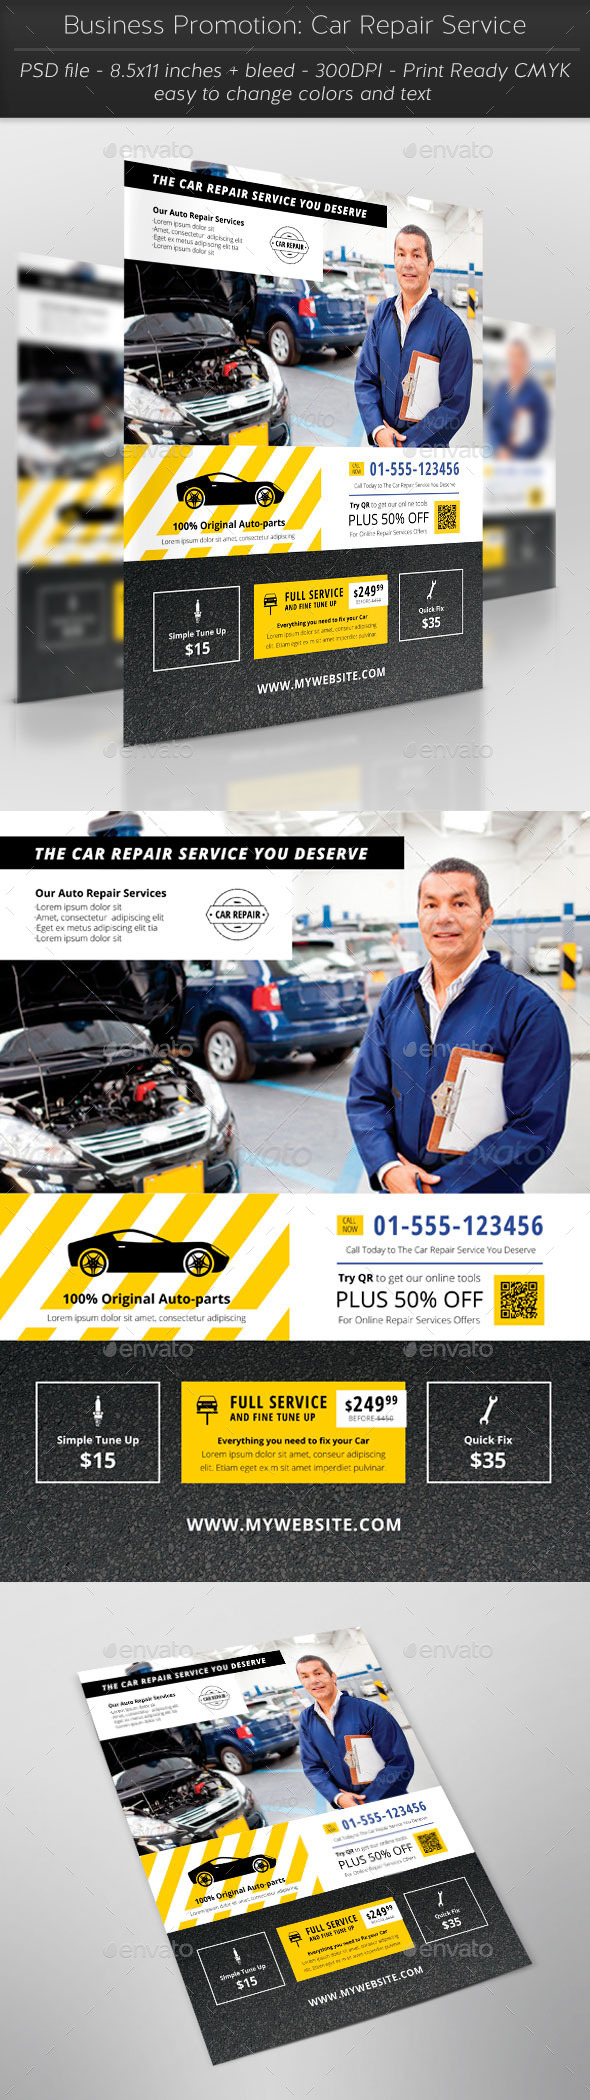 Business Promotion: Car Repair Service